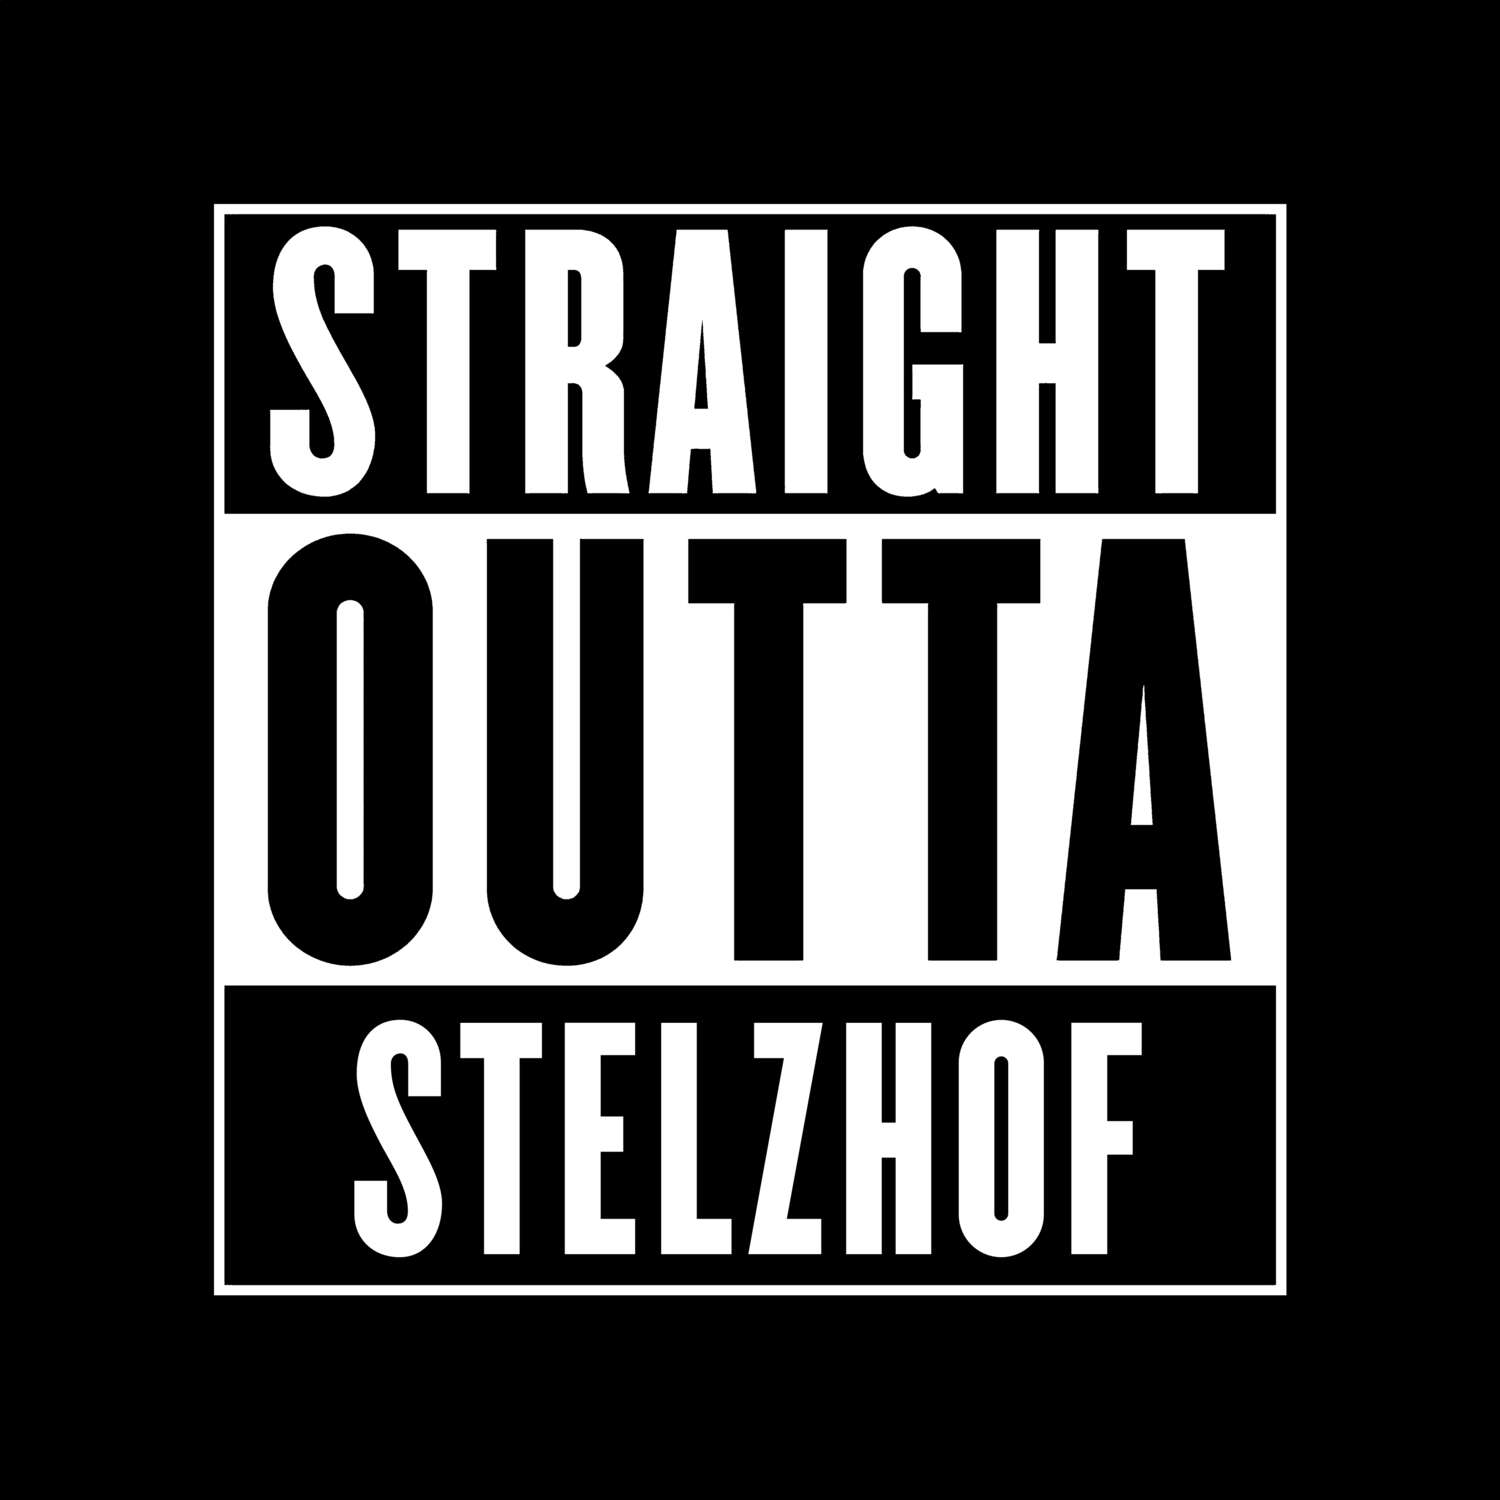 Stelzhof T-Shirt »Straight Outta«